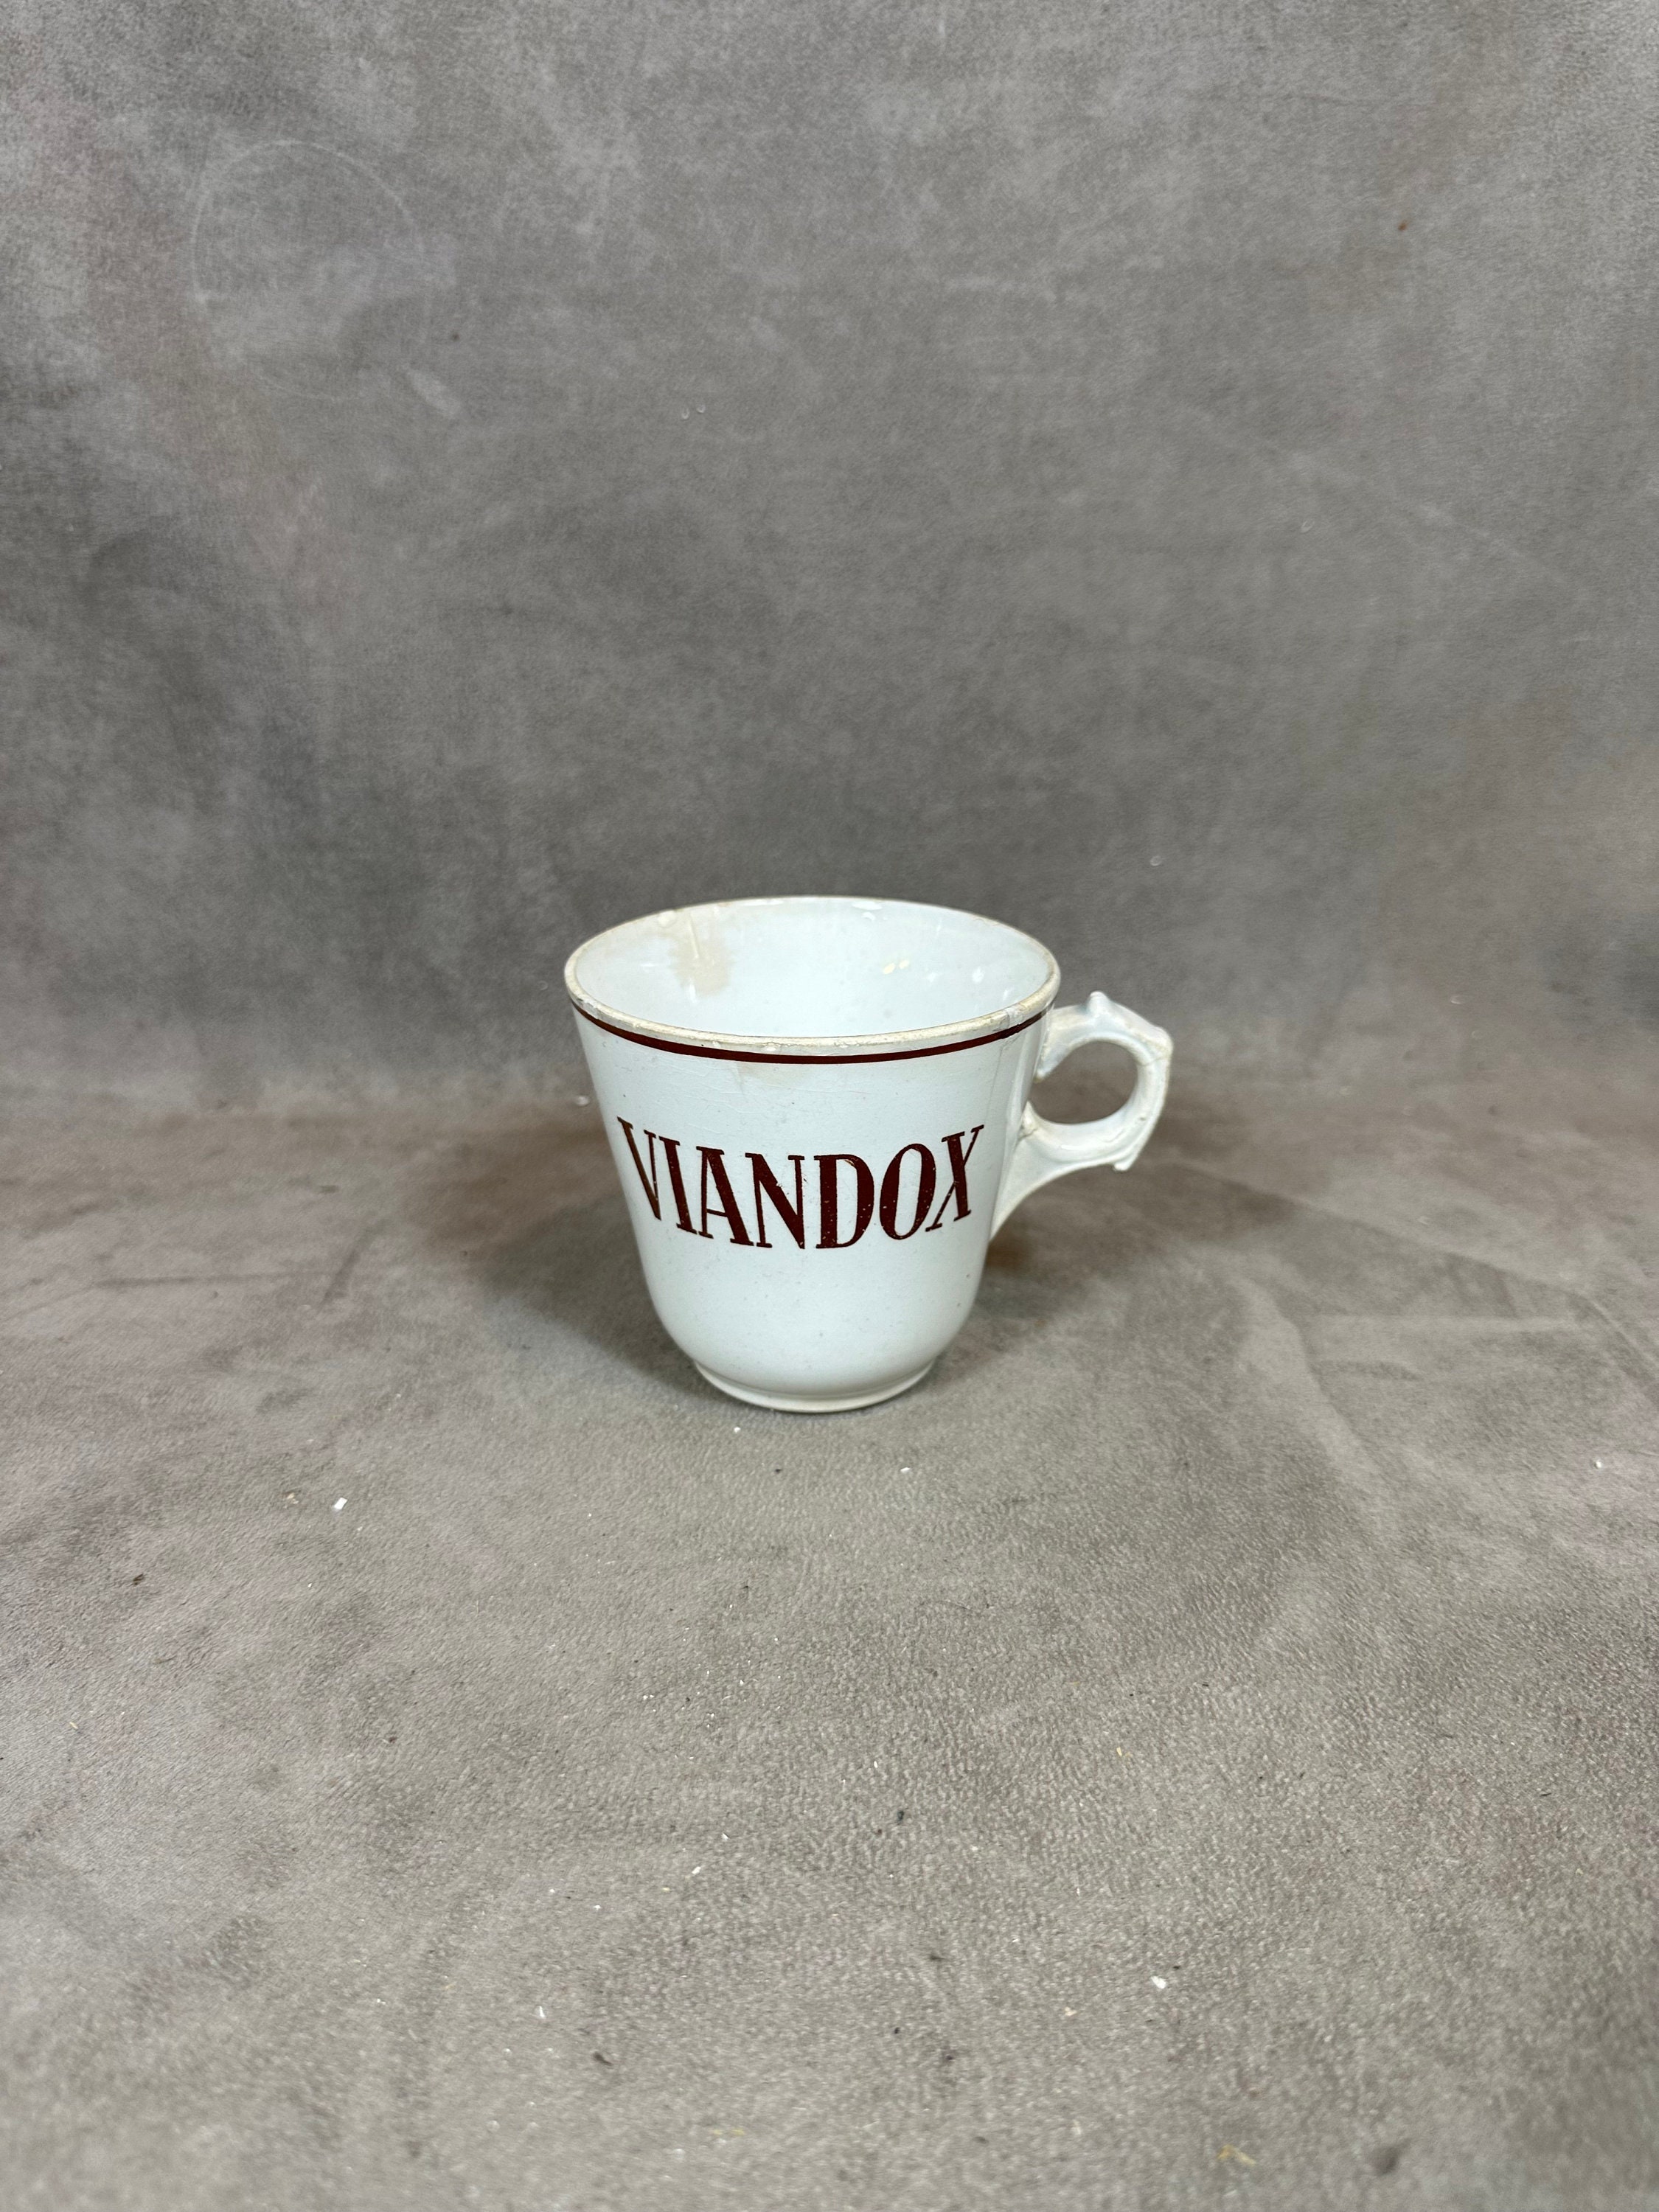 RARE Vintage Faience Viandox Mug Made in France 1950s 